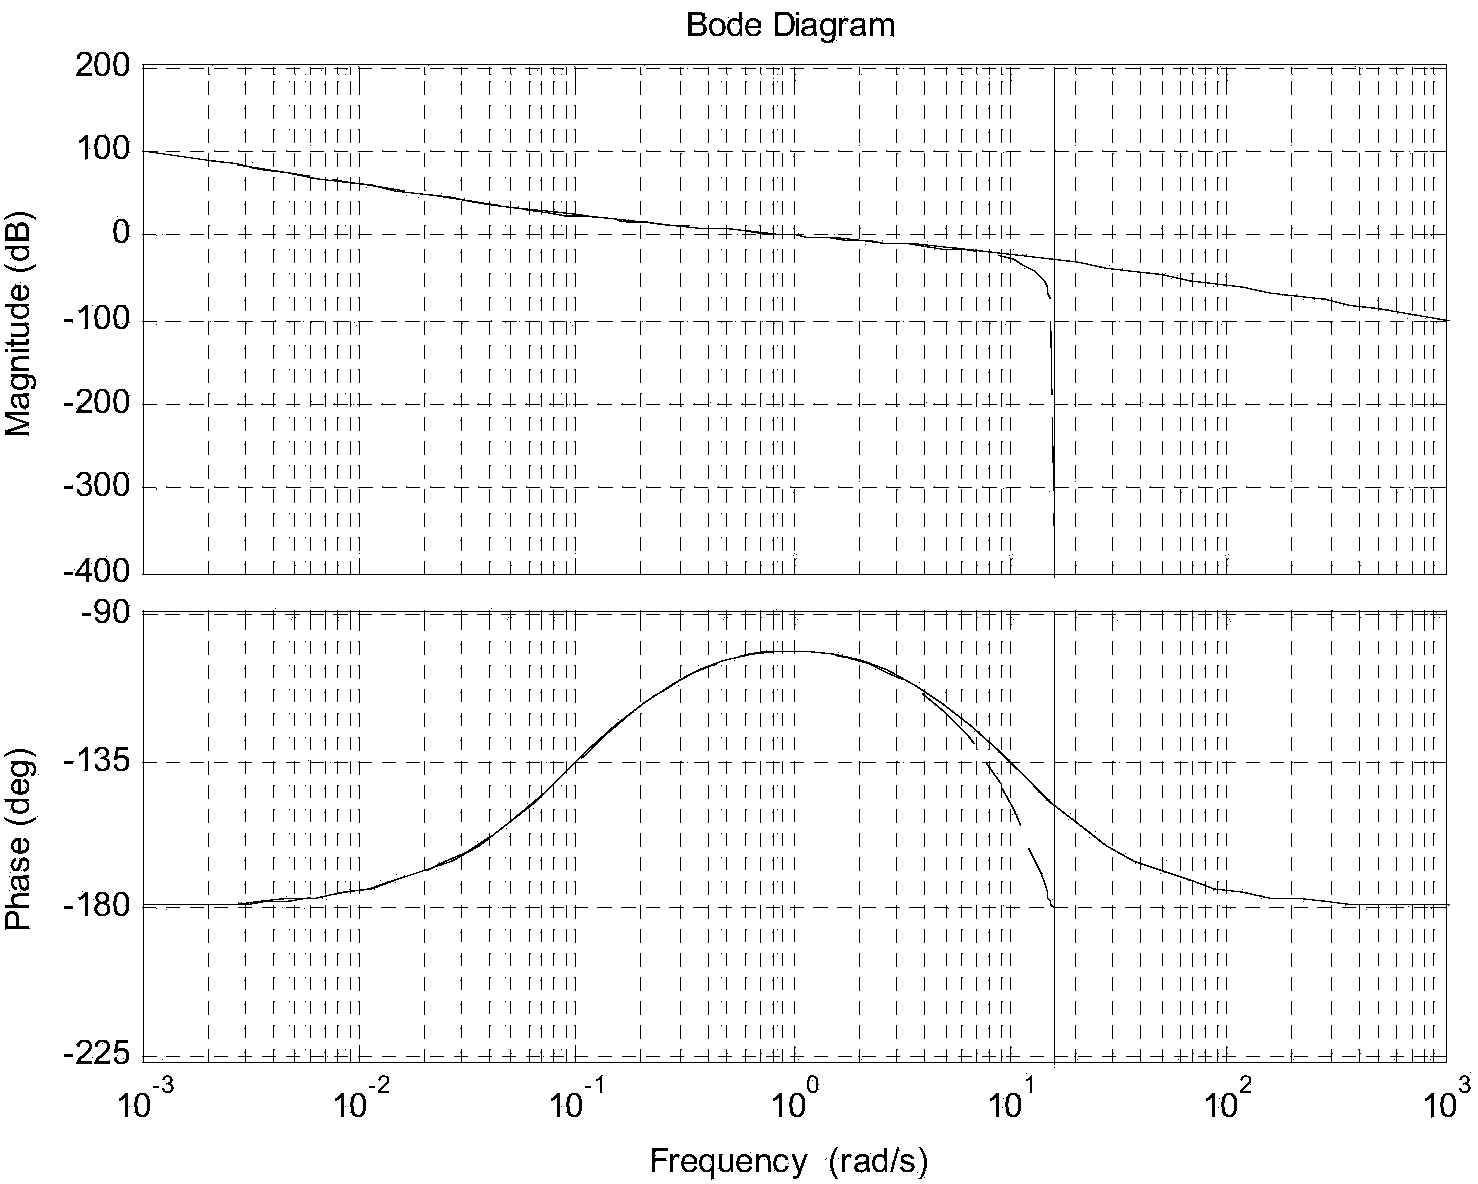 External measured speed information-based horizontal attitude error correction method for SINS (serial inertial navigation system)